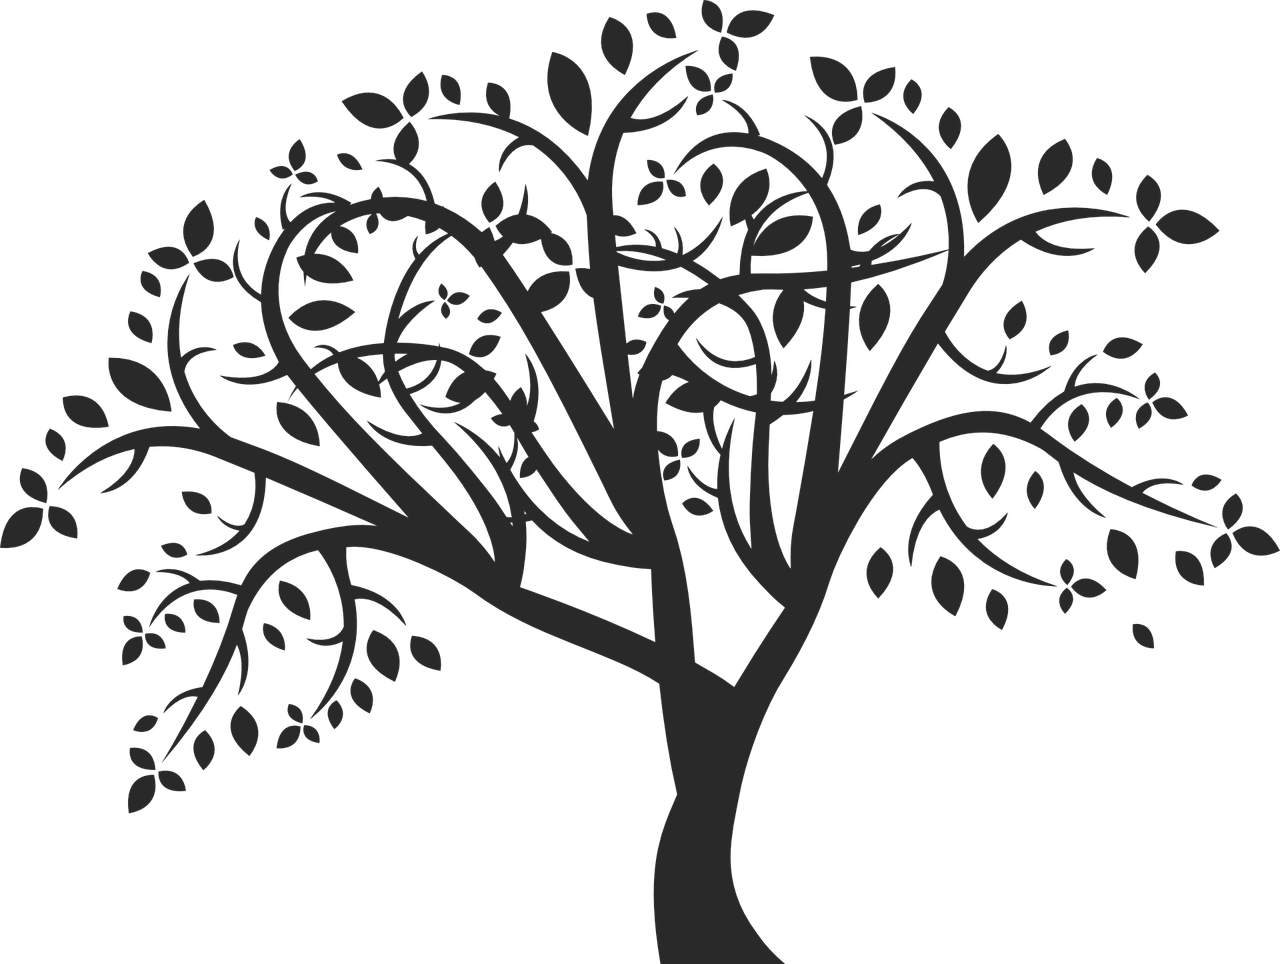 Family Tree - Slogan On Global Warming (1280x964)